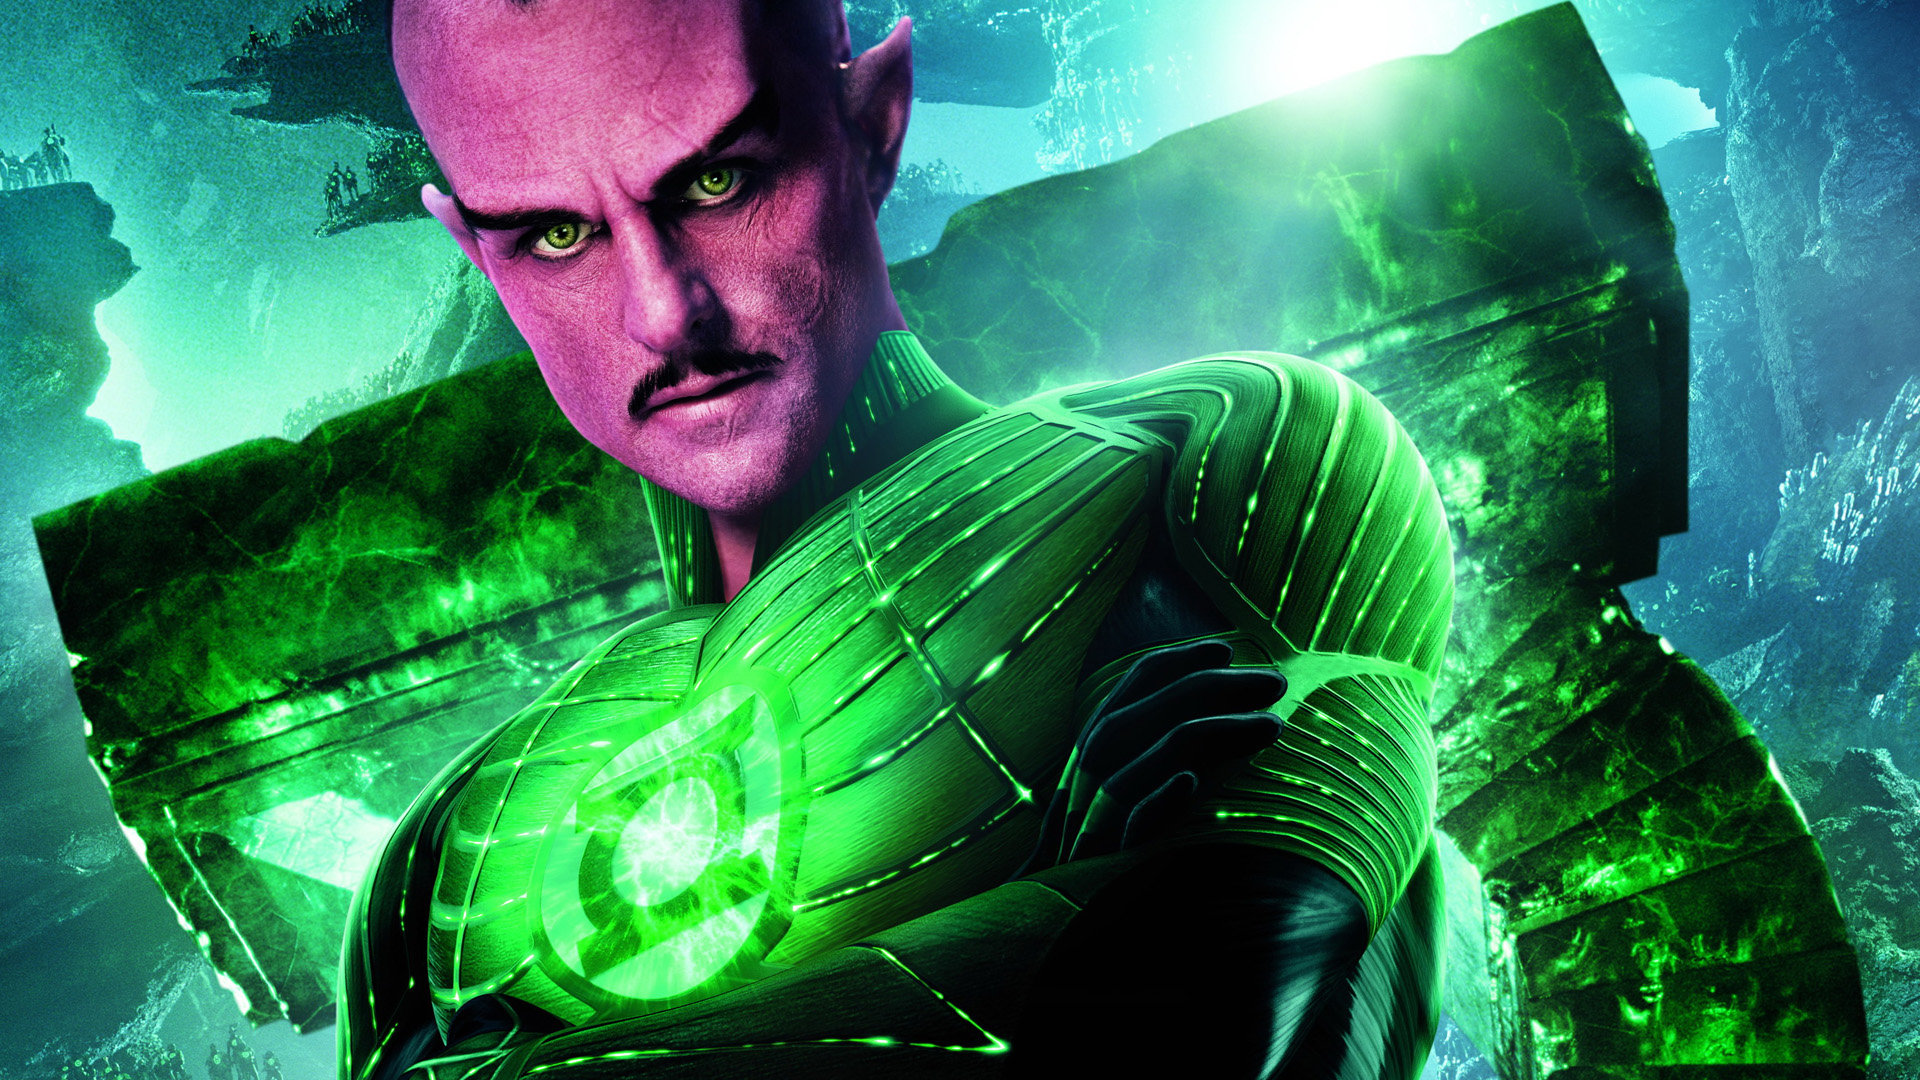 Download full hd 1080p Green Lantern Movie desktop background ID:50663 for free